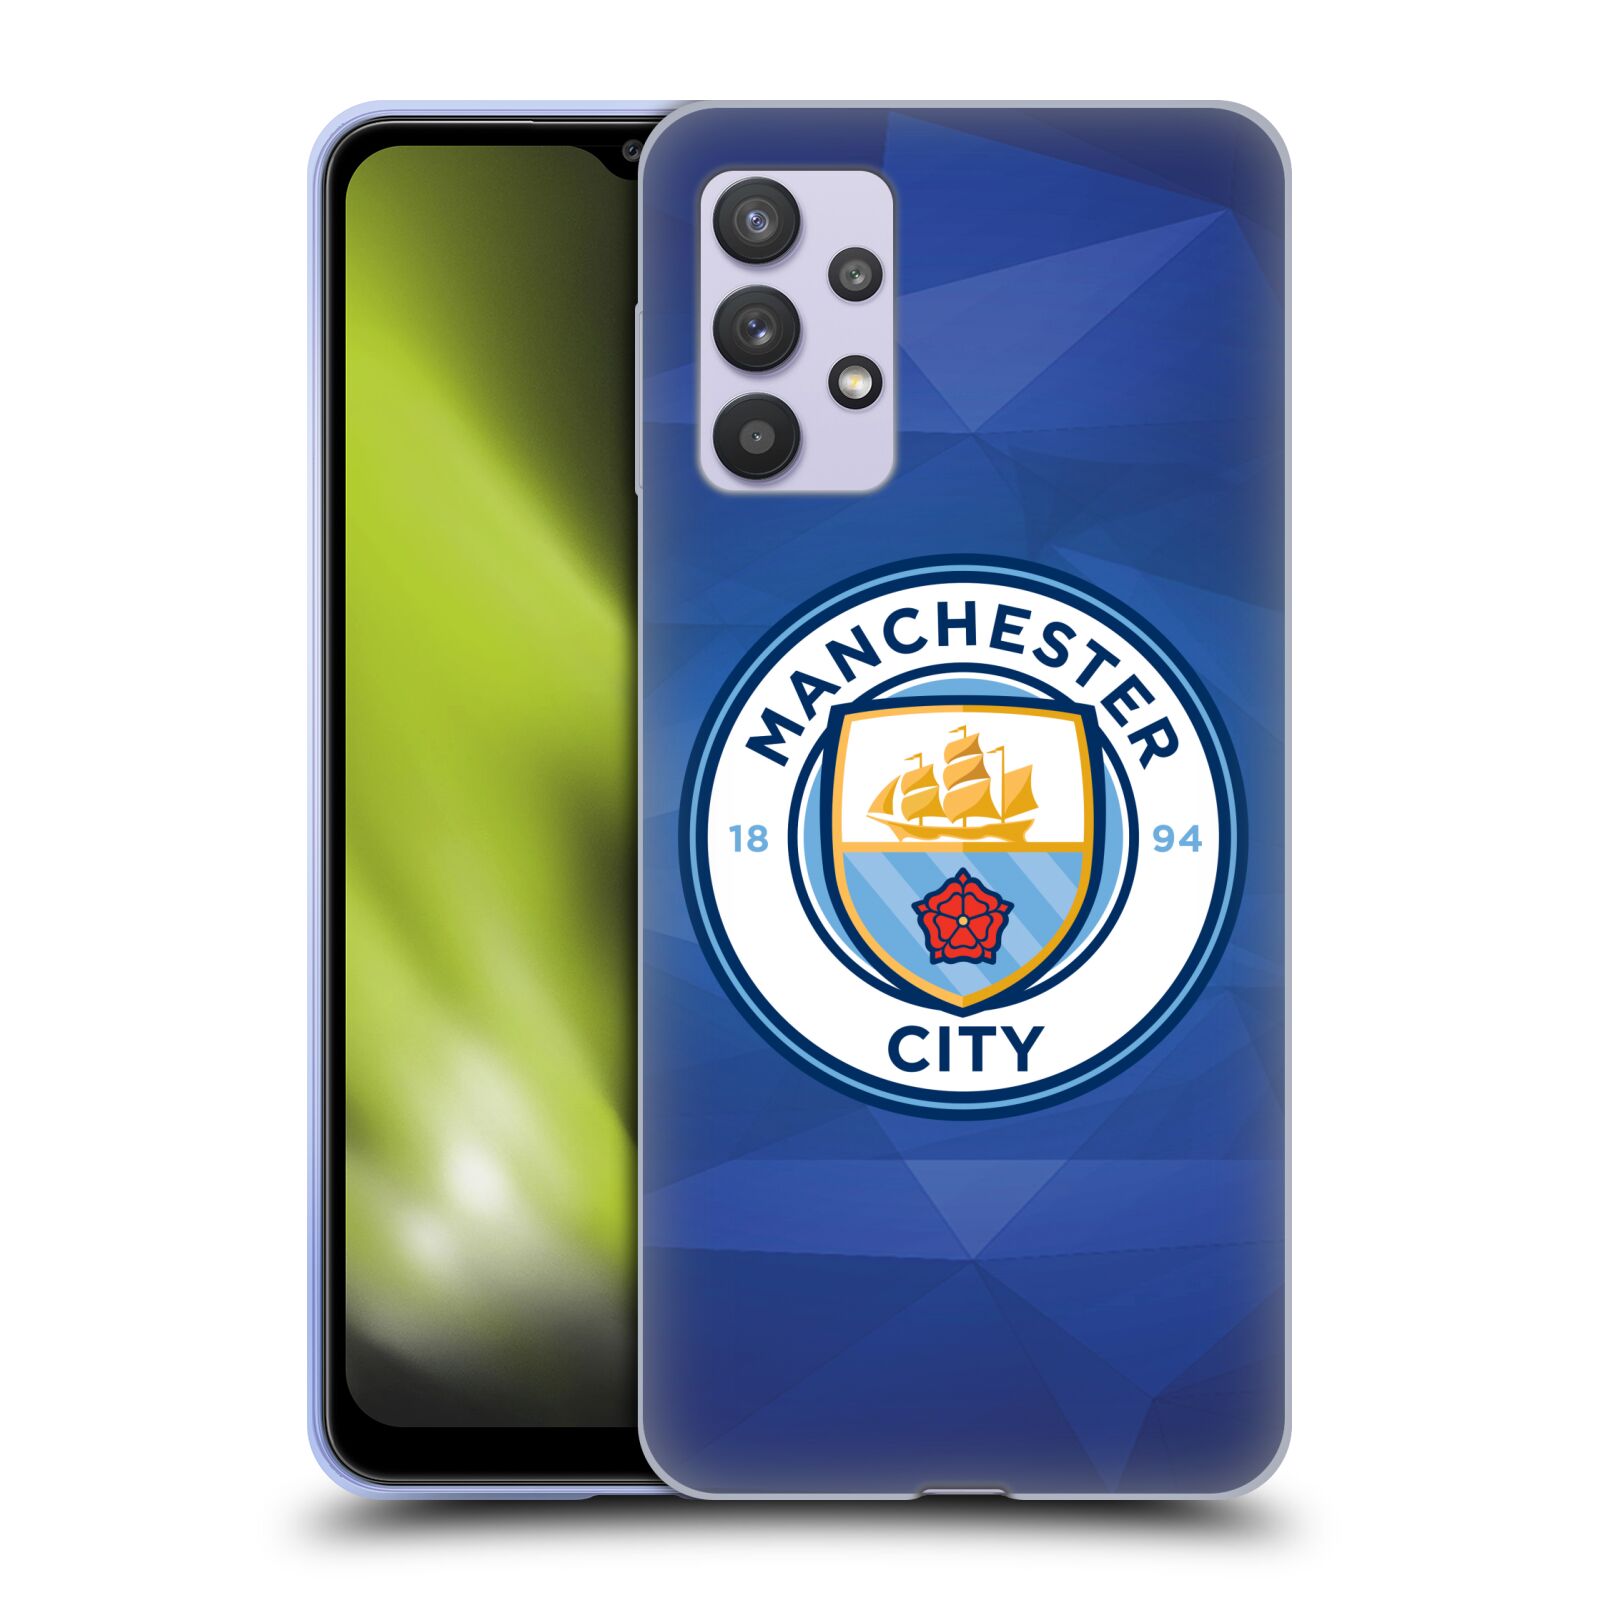 Silikonové pouzdro na mobil Samsung Galaxy A32 5G - Head Case - Manchester City FC - Modré nové logo (Silikonový kryt, obal, pouzdro na mobilní telefon Samsung Galaxy A32 5G (SM-A326B) s motivem Manchester City FC - Modré nové logo)